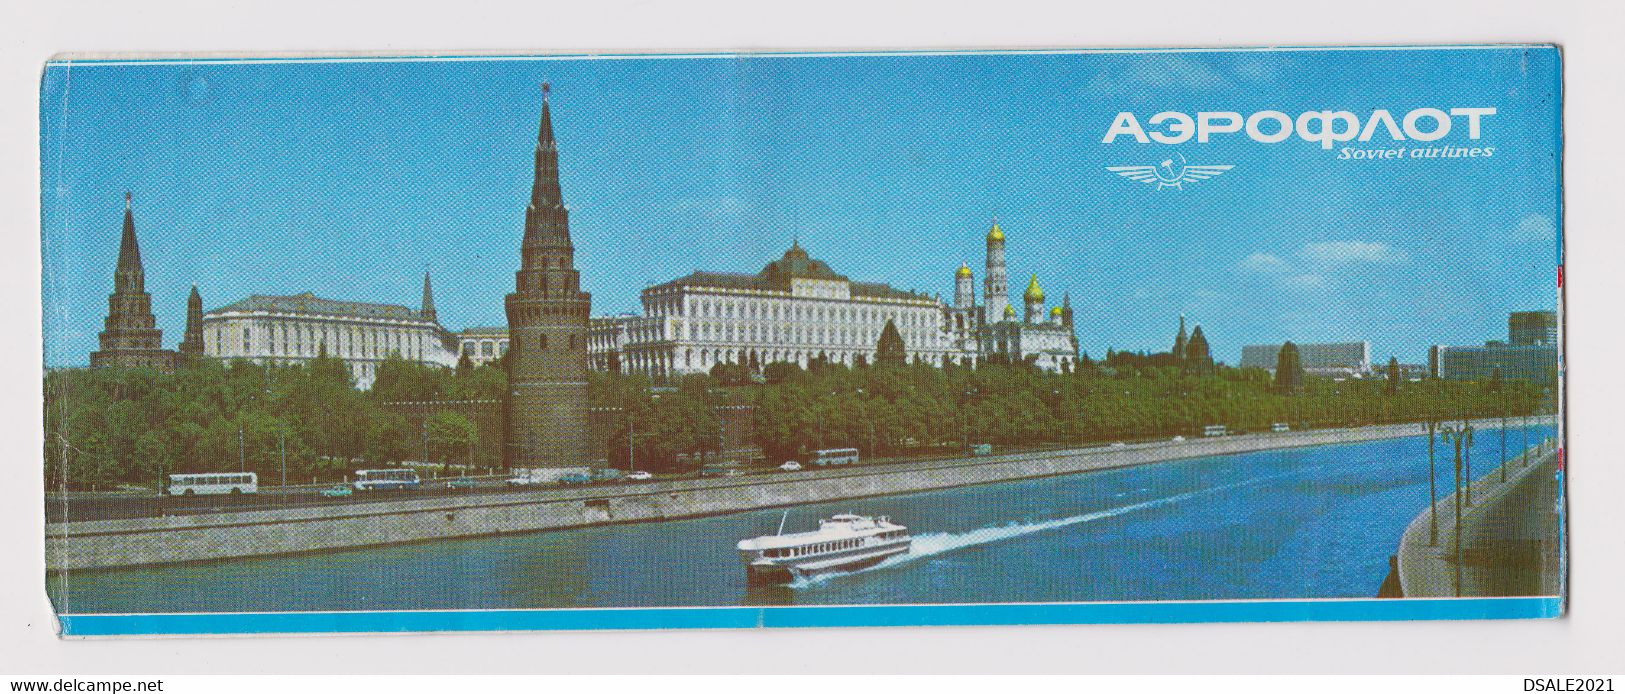 USSR Russia Soviet Union Airlines Airline AEROFLOT Vintage Passenger Ticket 1984 Used (49187) - Biglietti